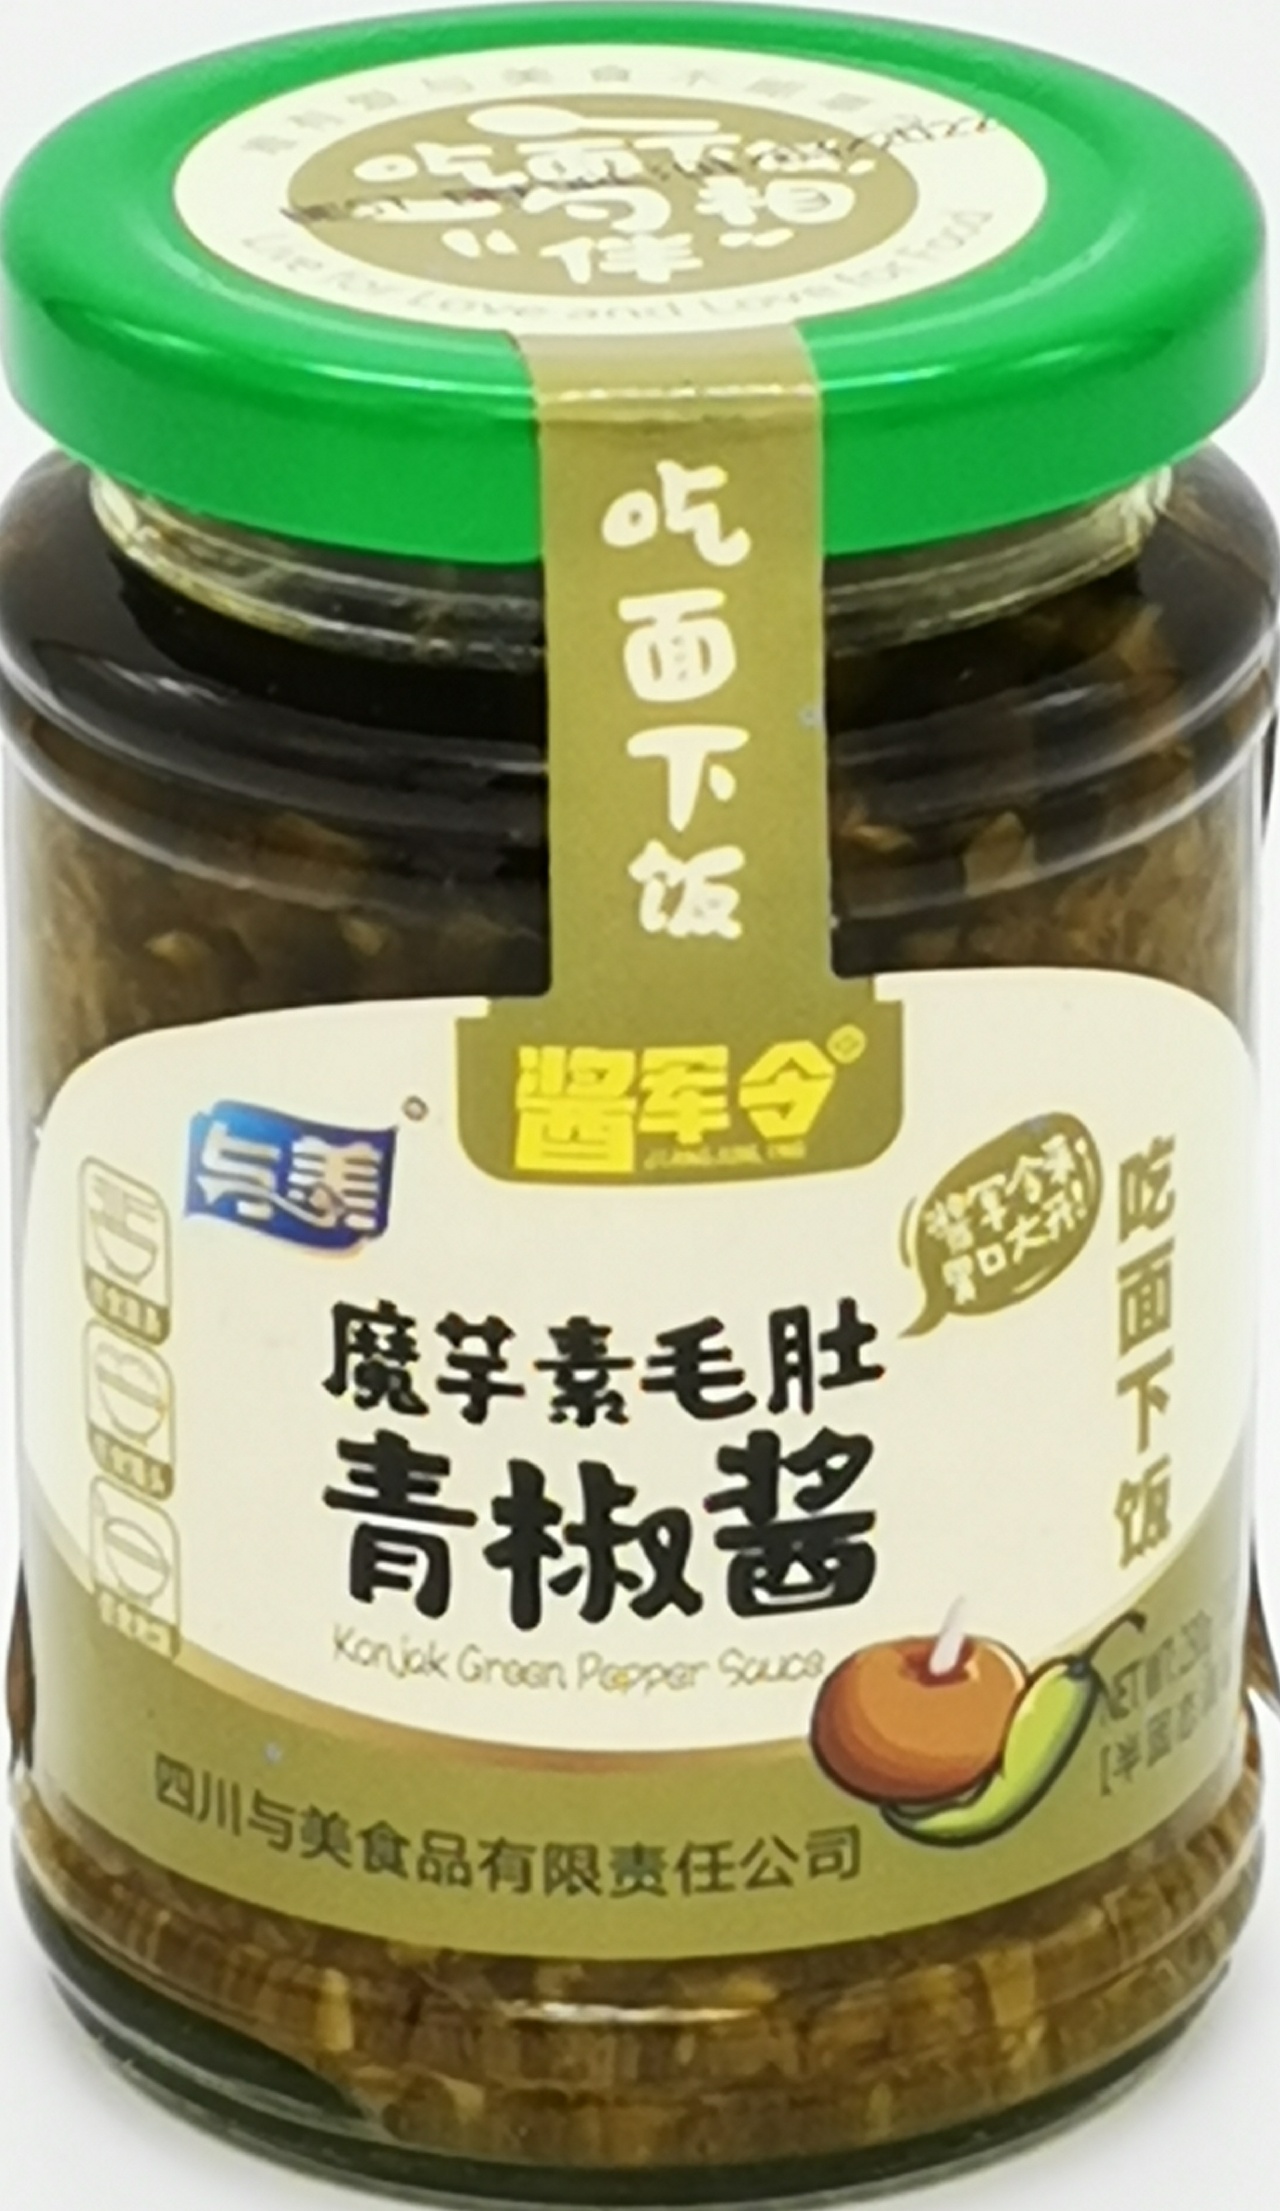 Konjac Green Pepper Sauce 230g